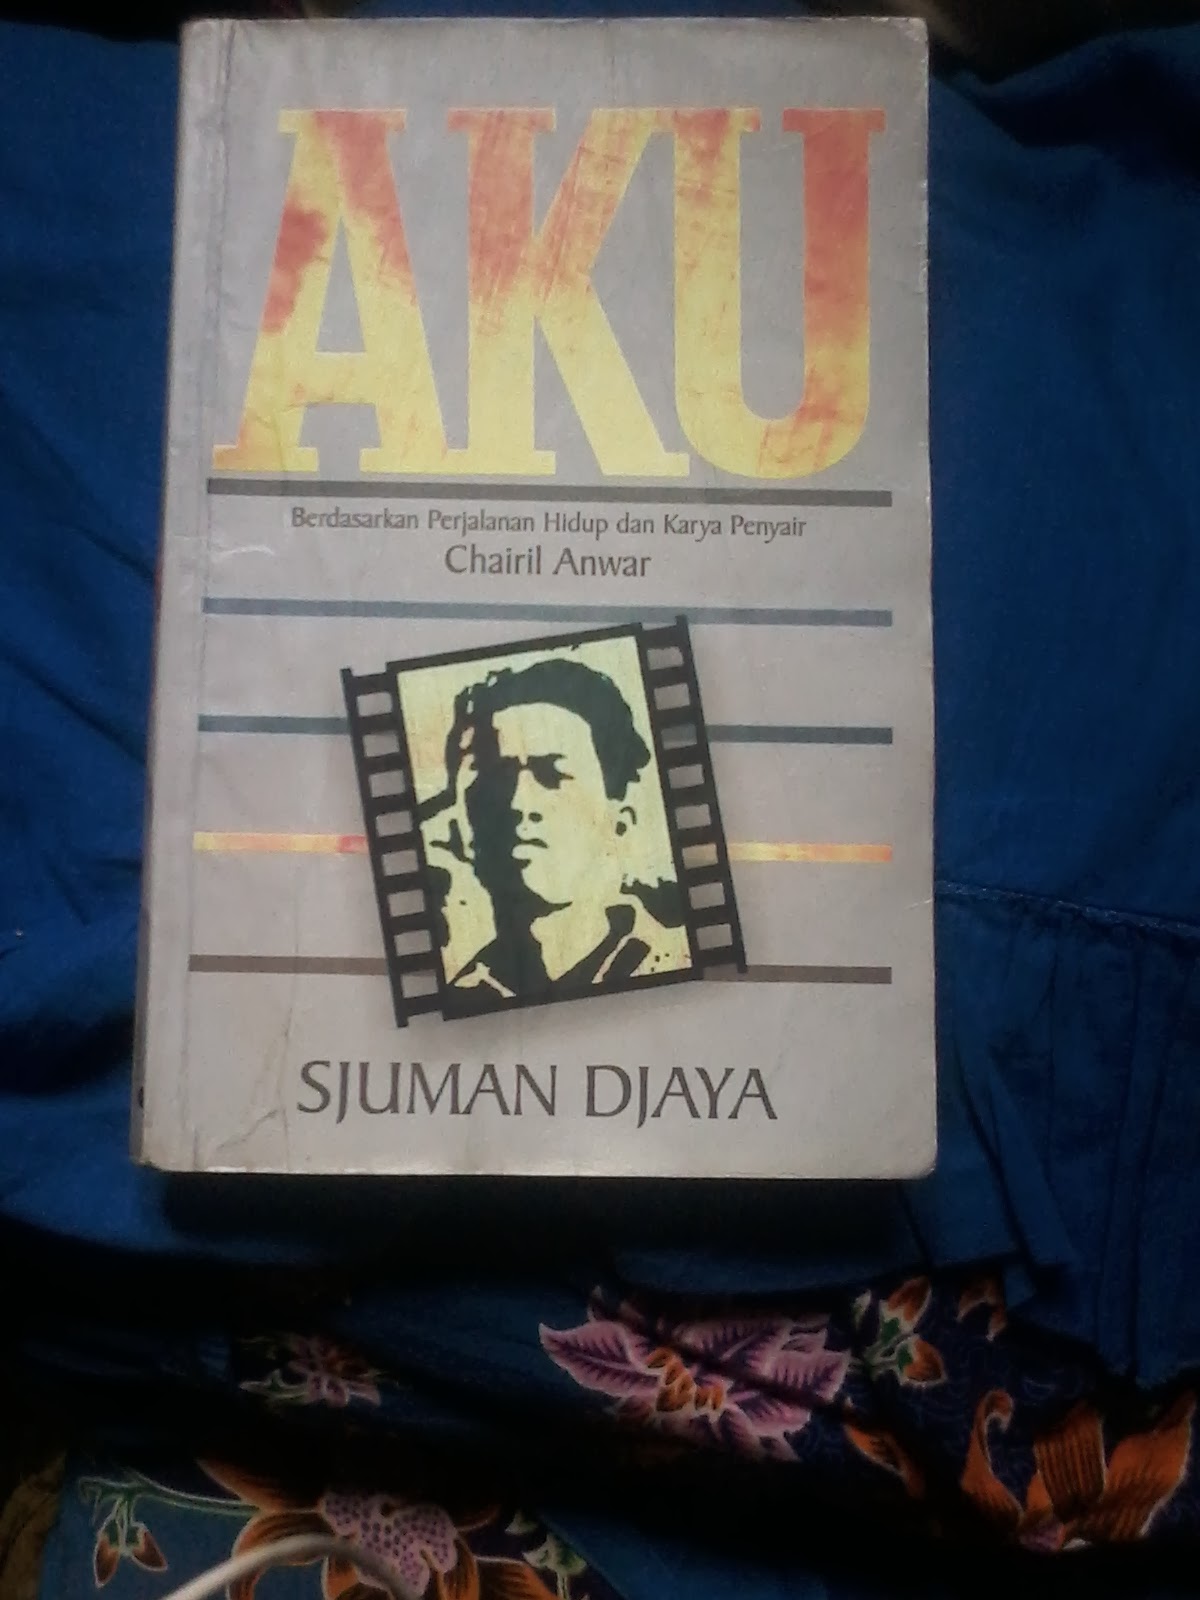 Download Ebook Aku Karya Sjuman Djaya